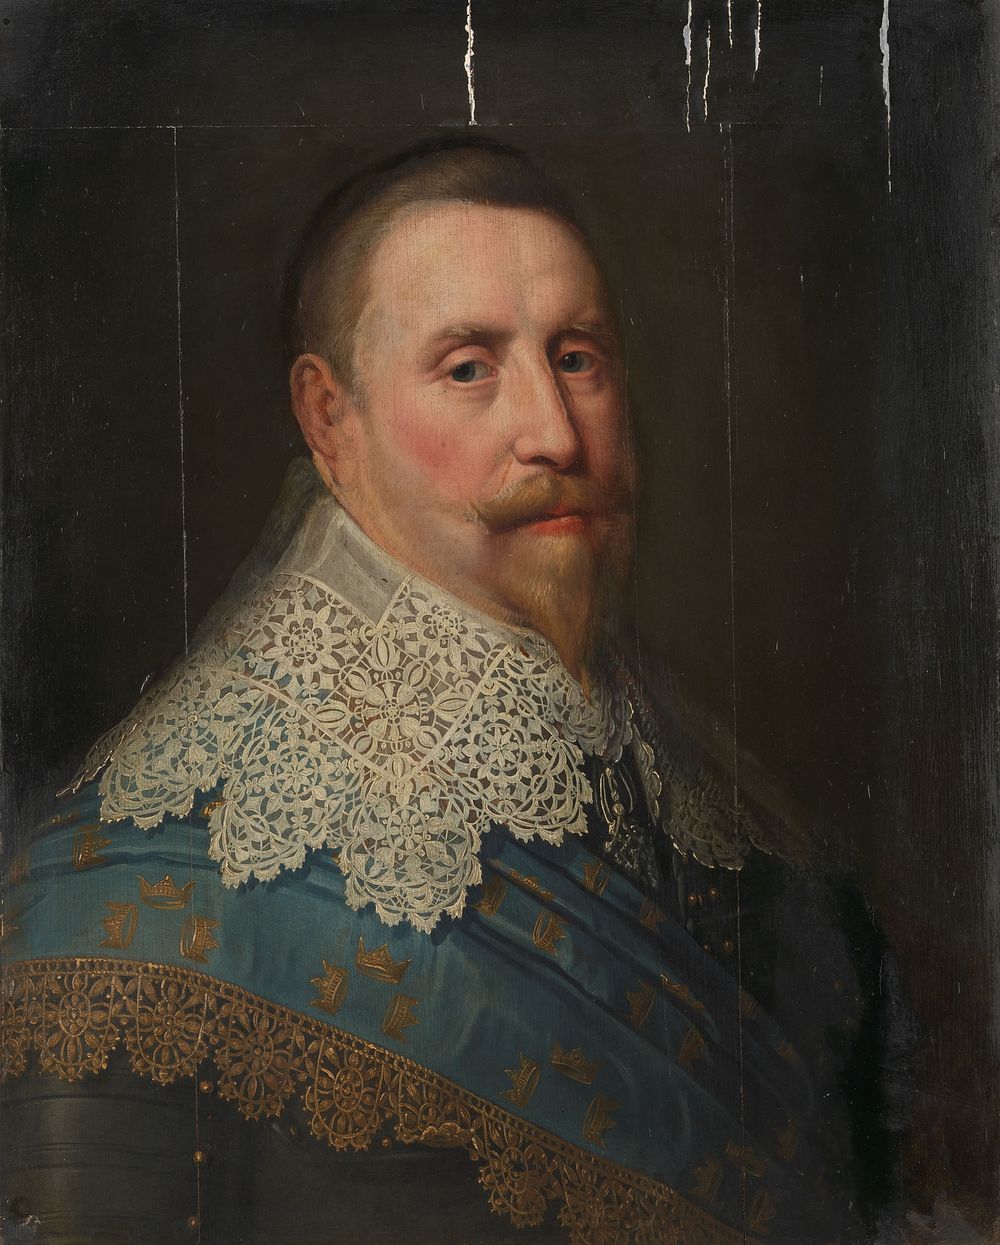 Portrait of Gustav II Adolf (1594-1632), King of Sweden (in or after c. 1633) by Michiel Jansz van Mierevelt